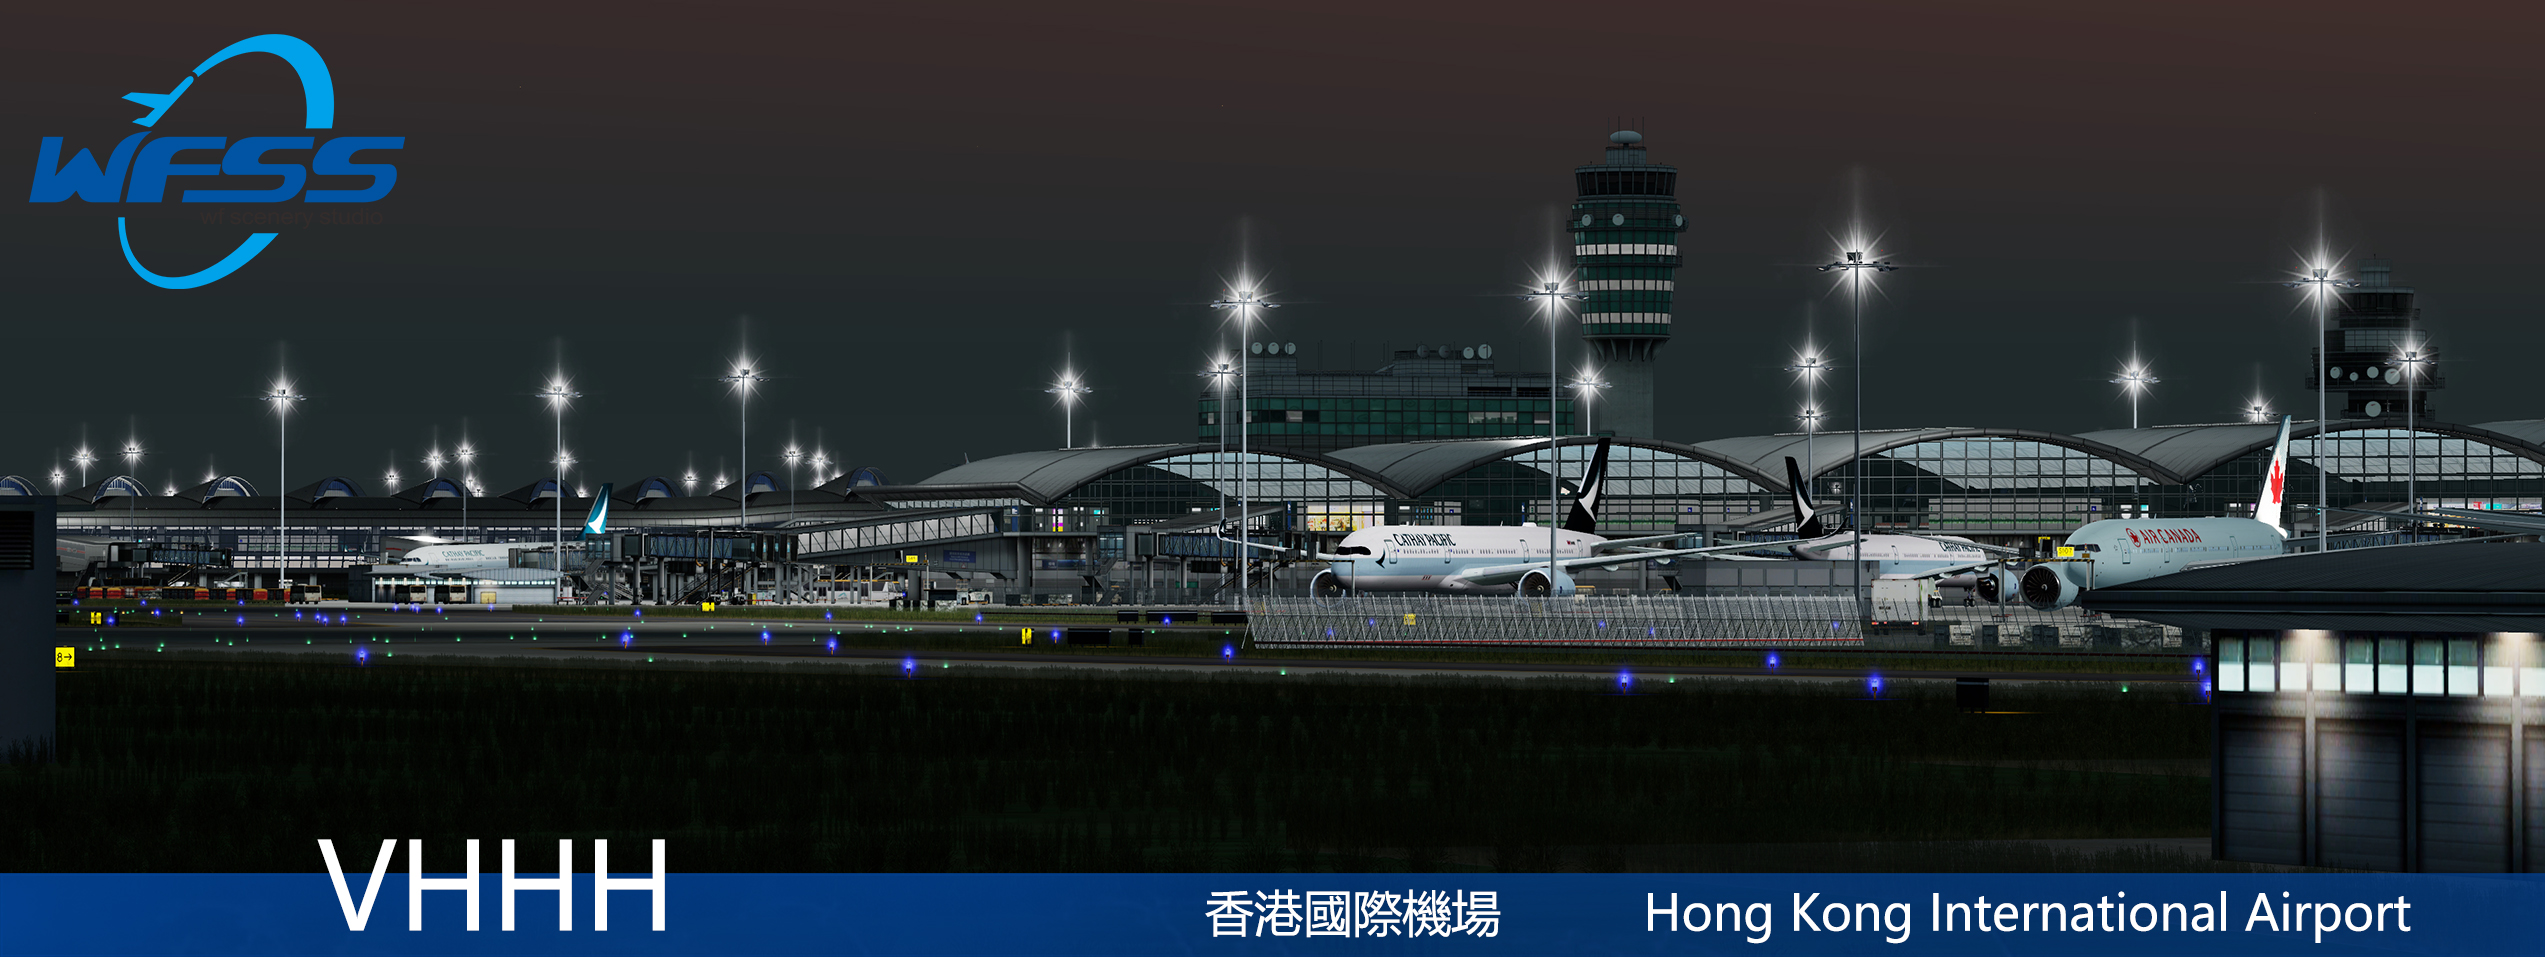 WFSS-香港国际机场发布-3943 